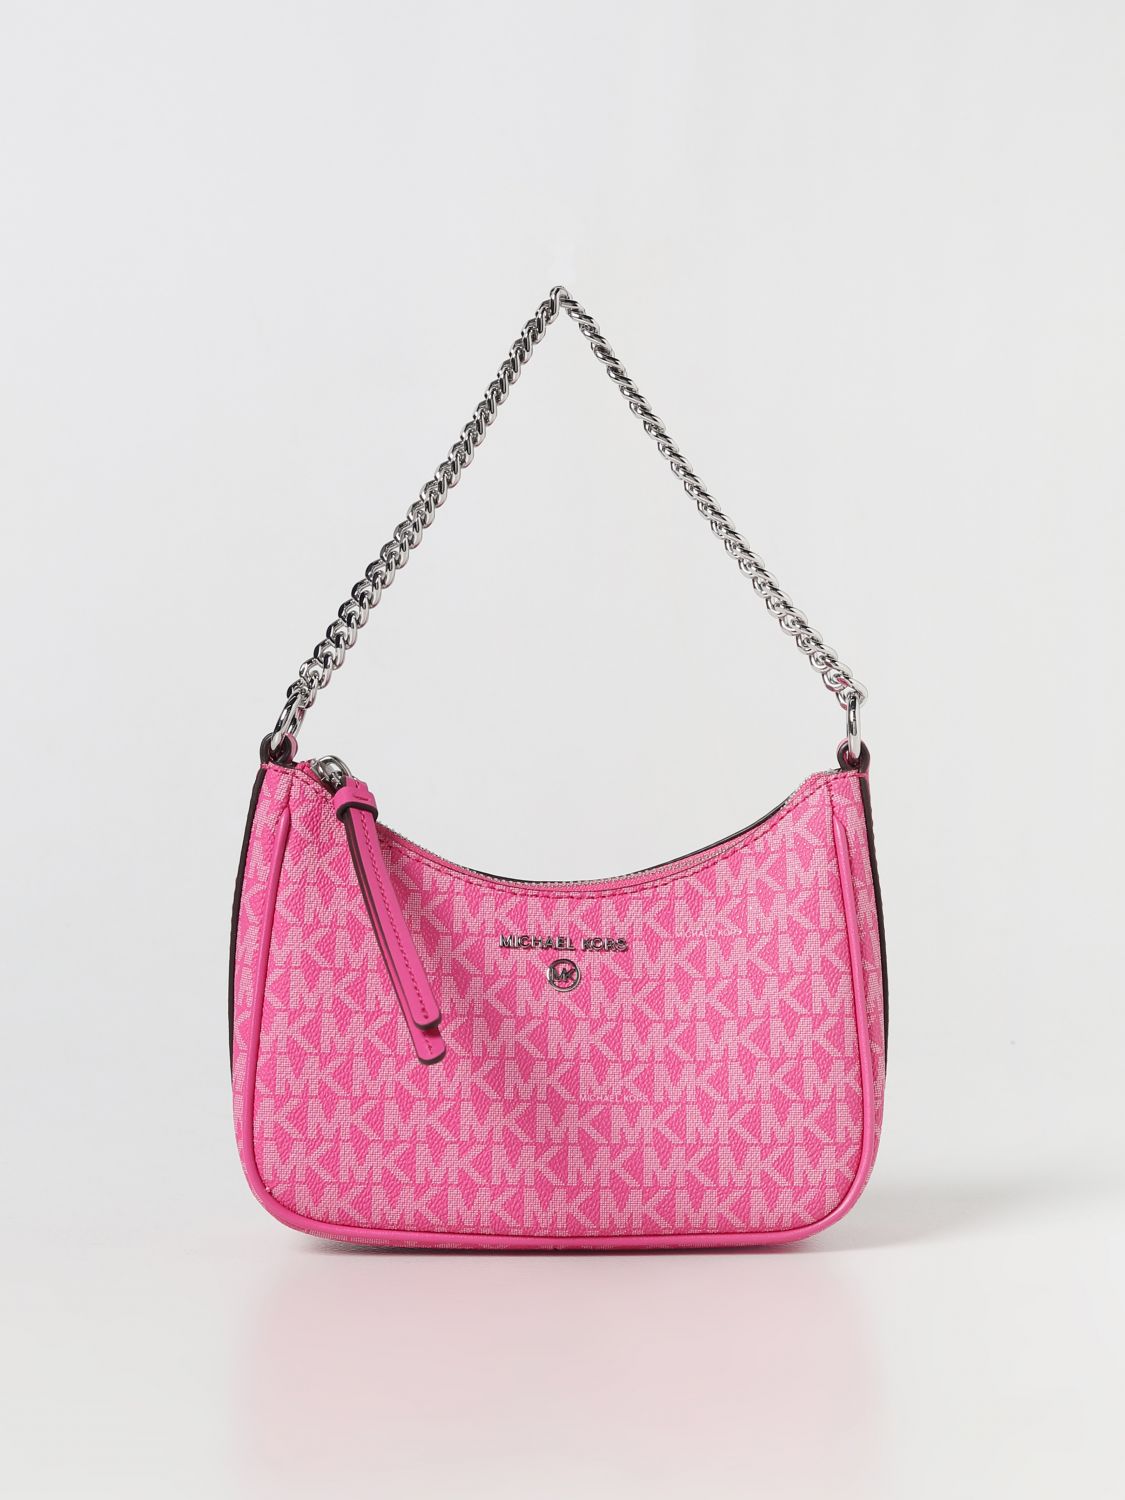 MICHAEL KORS: mini bag for woman - Pink | Michael Kors mini bag ...